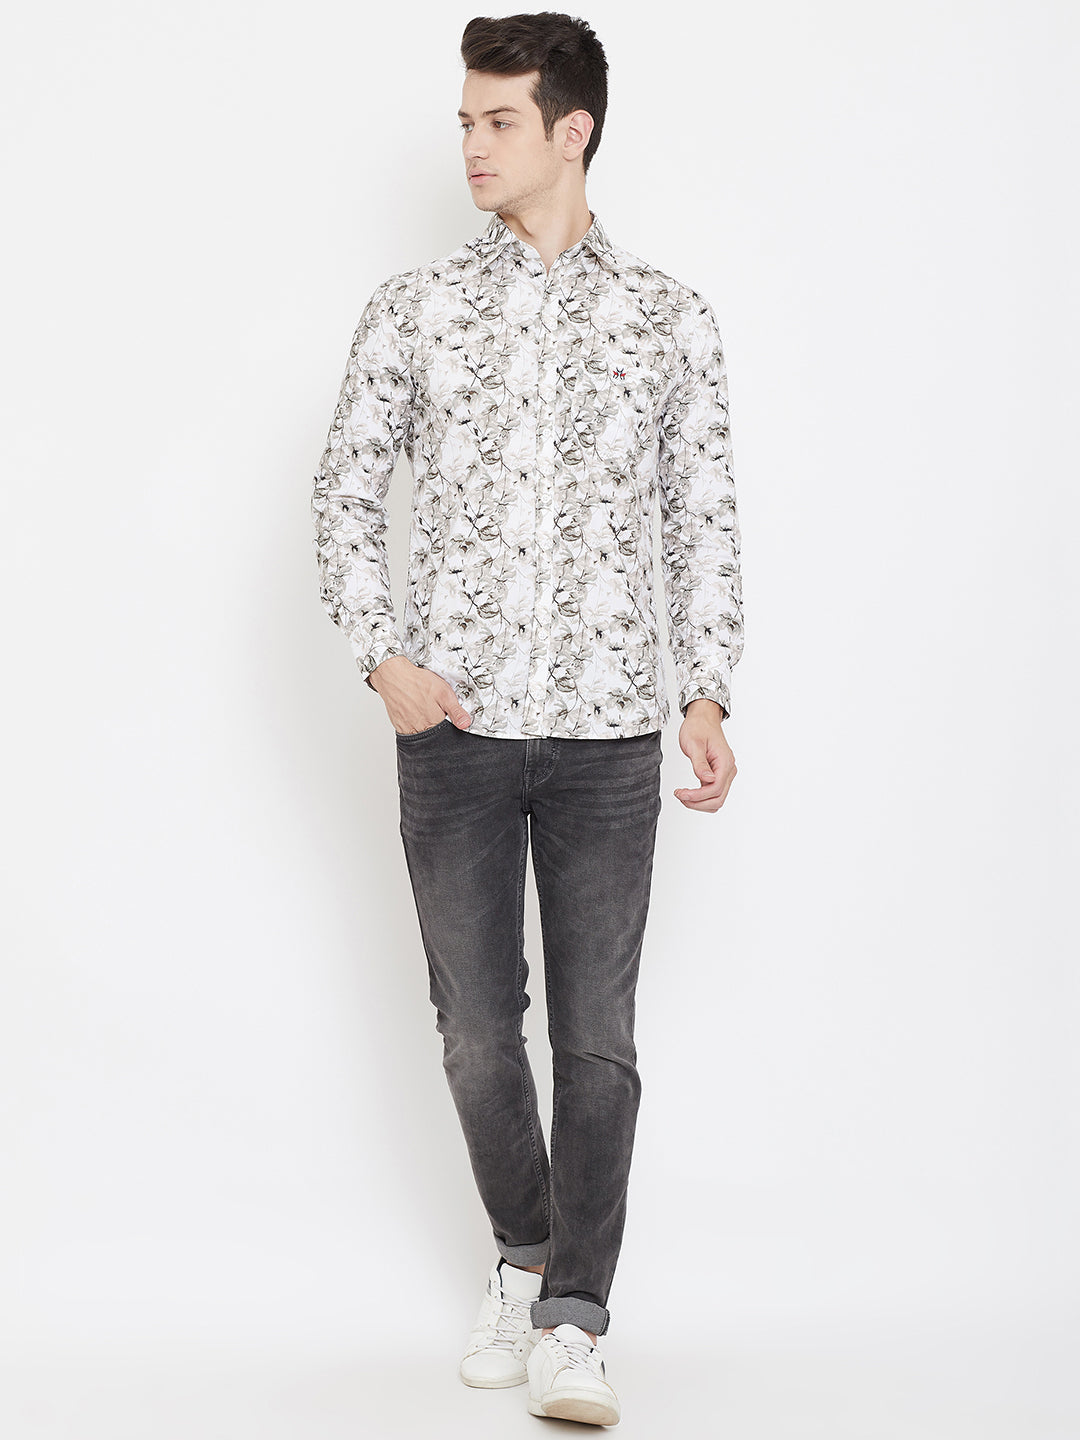 Beige Floral Spread Collar Slim Fit Shirt - Men Shirts